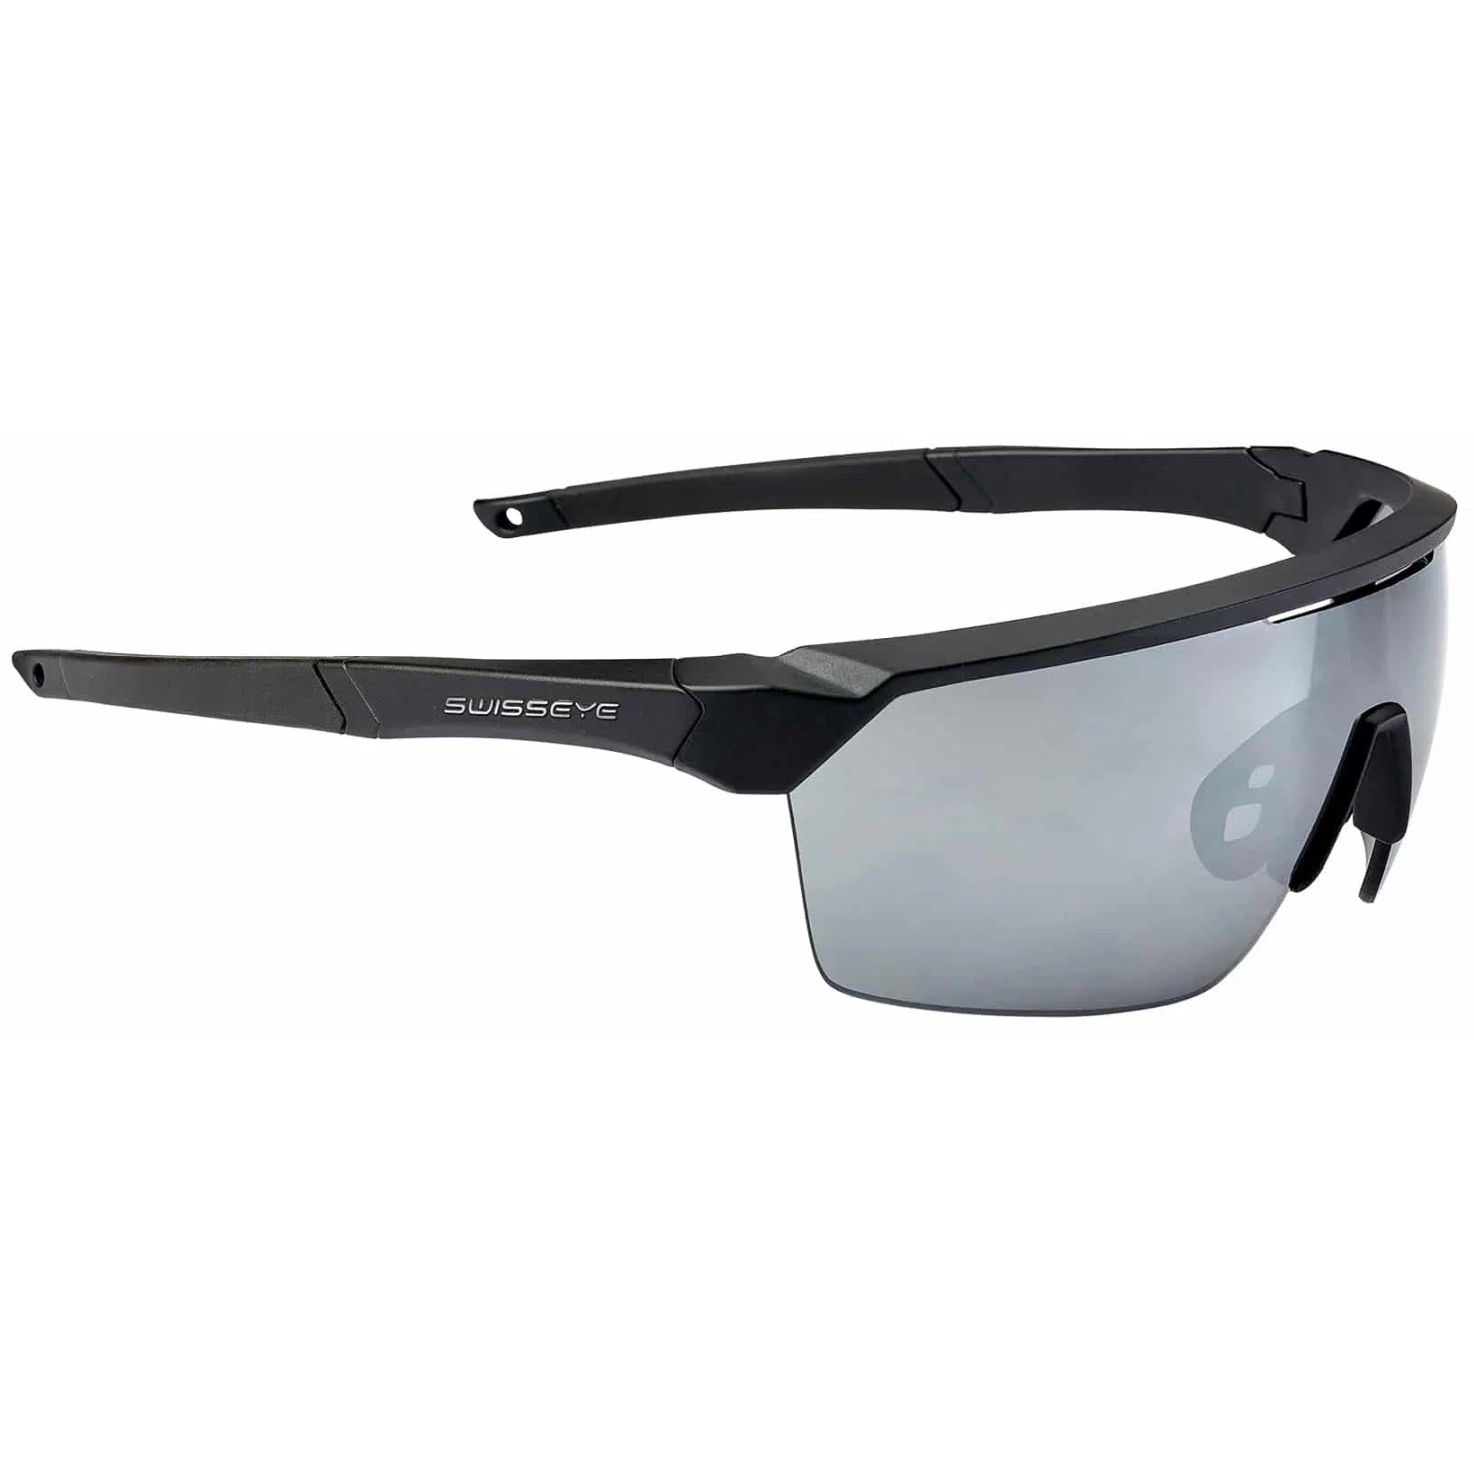 Picture of Swiss Eye Sprint Glasses 13041 - Gun Metal Matt/Black - Smoke FM